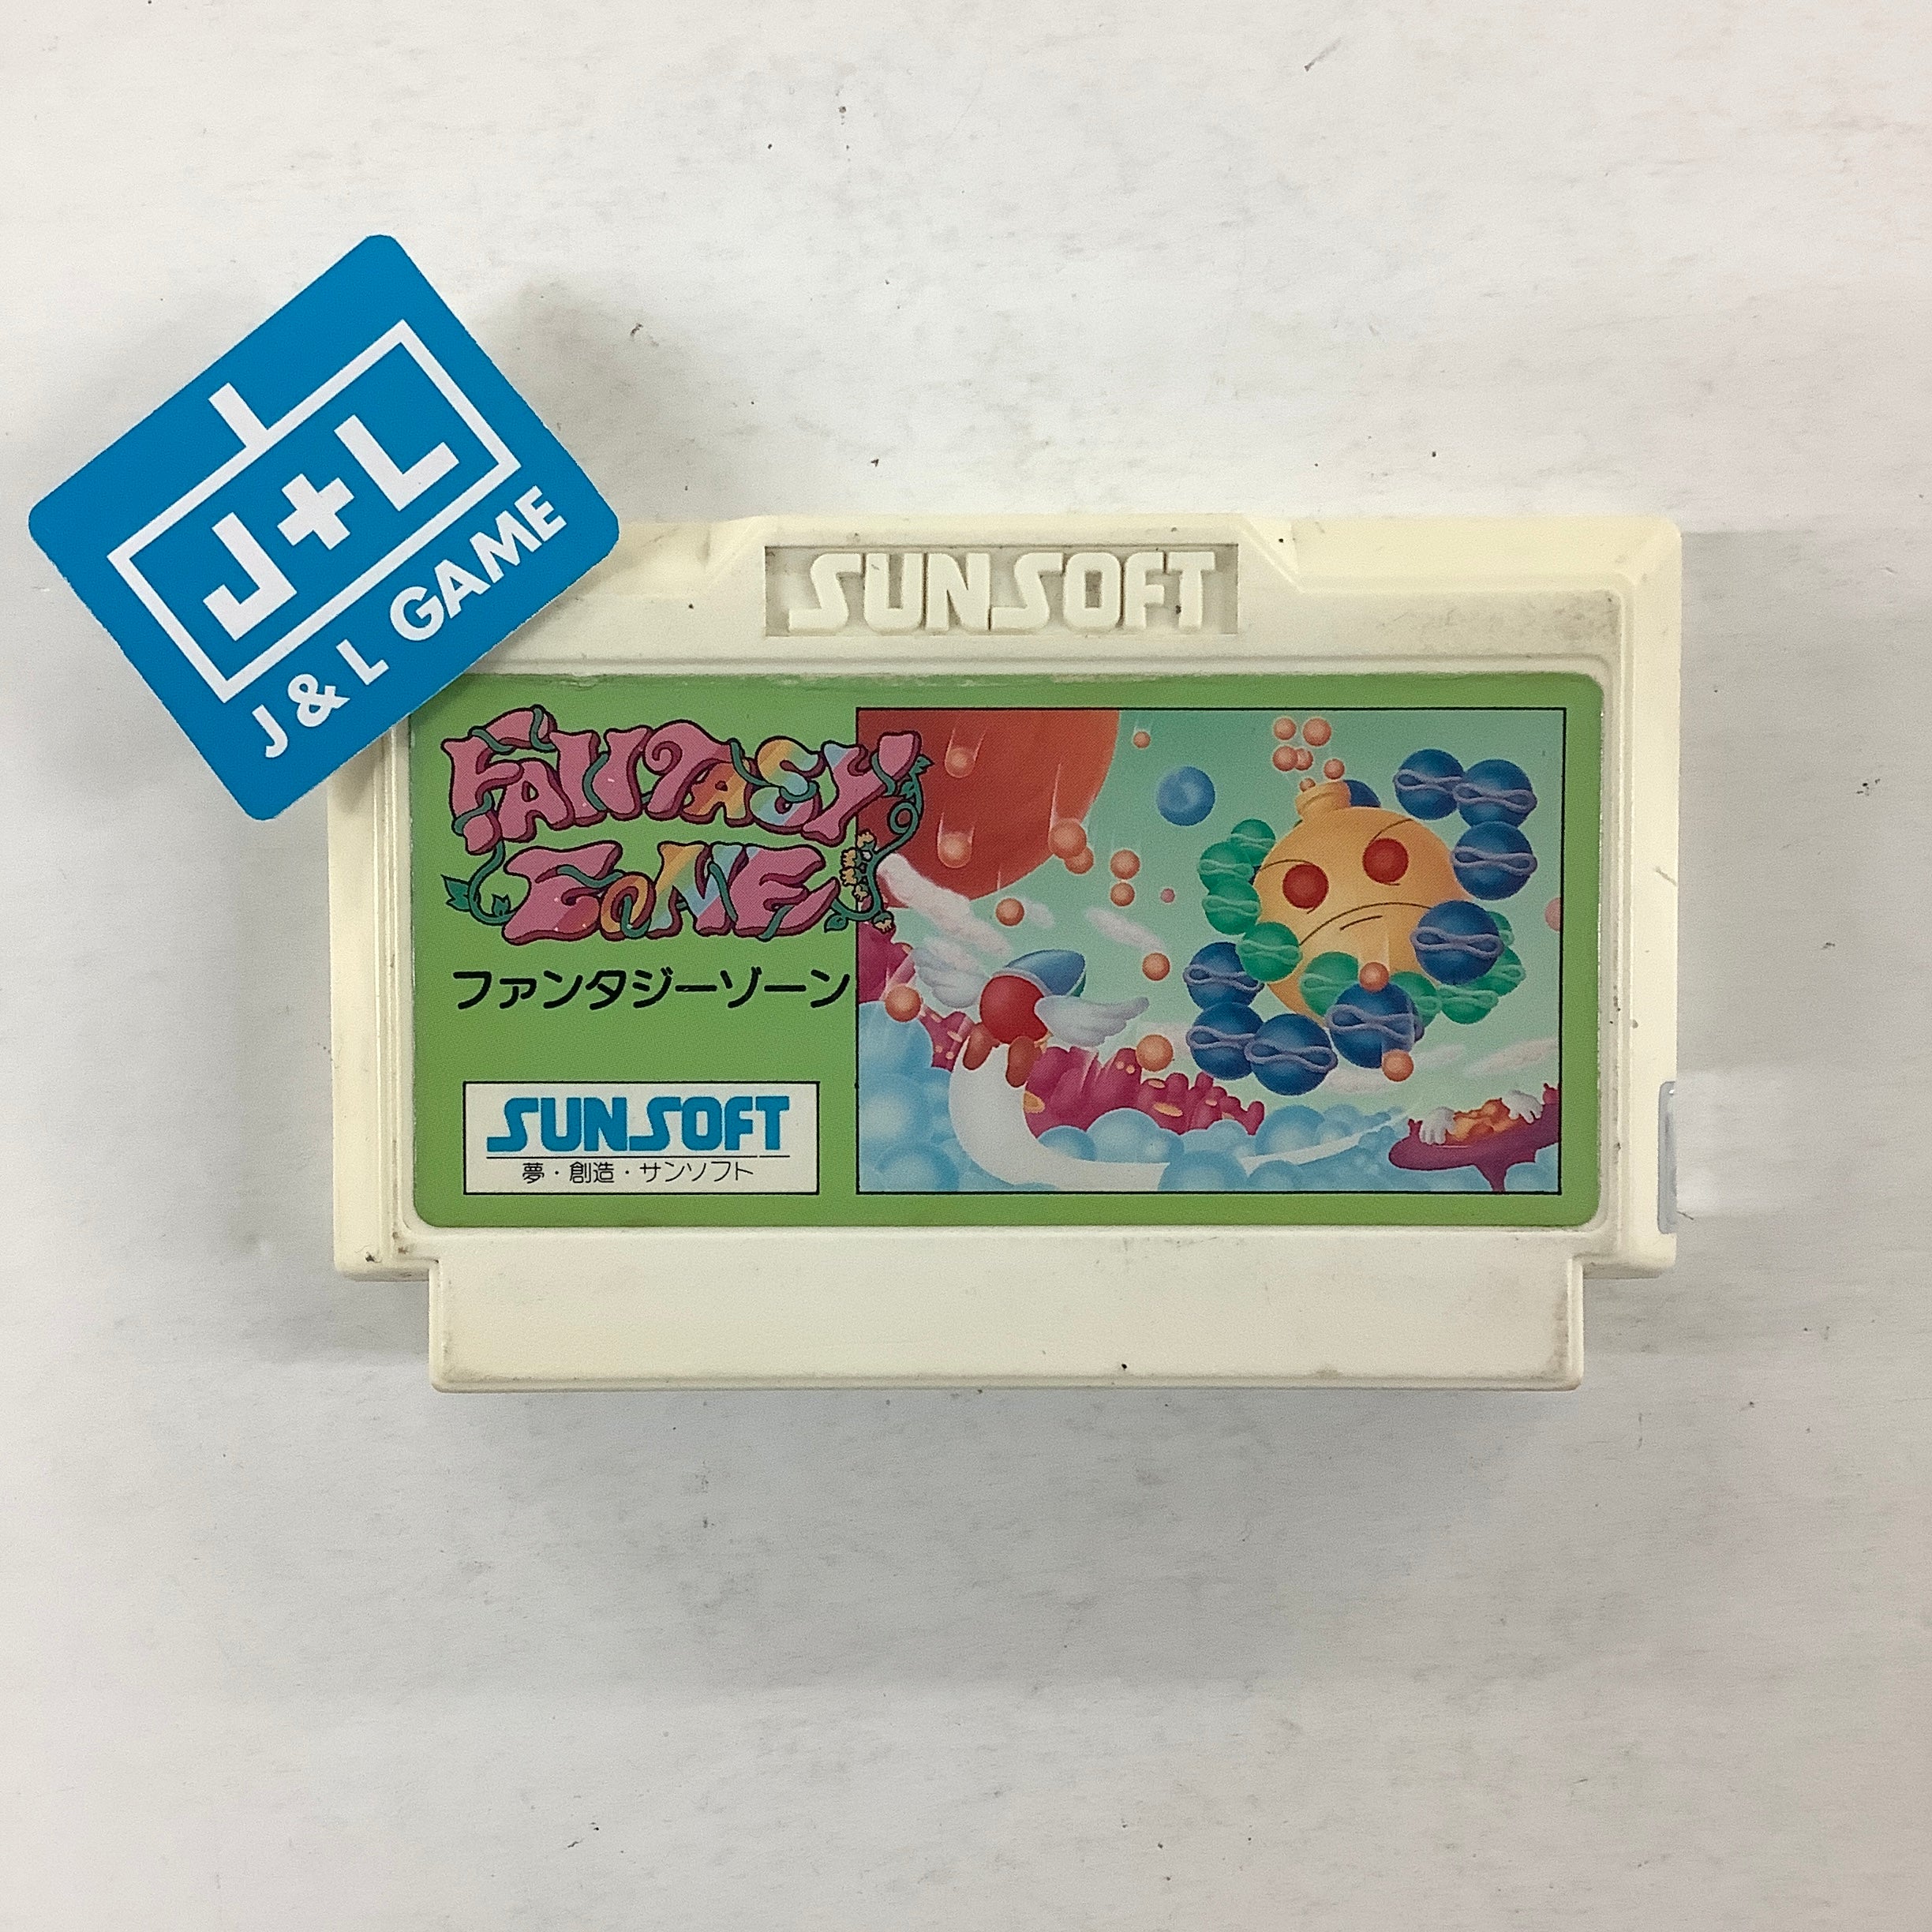 Fantasy Zone - Nintendo Famicom (Japanese Import) [Pre-Owned] Video Games SunSoft   